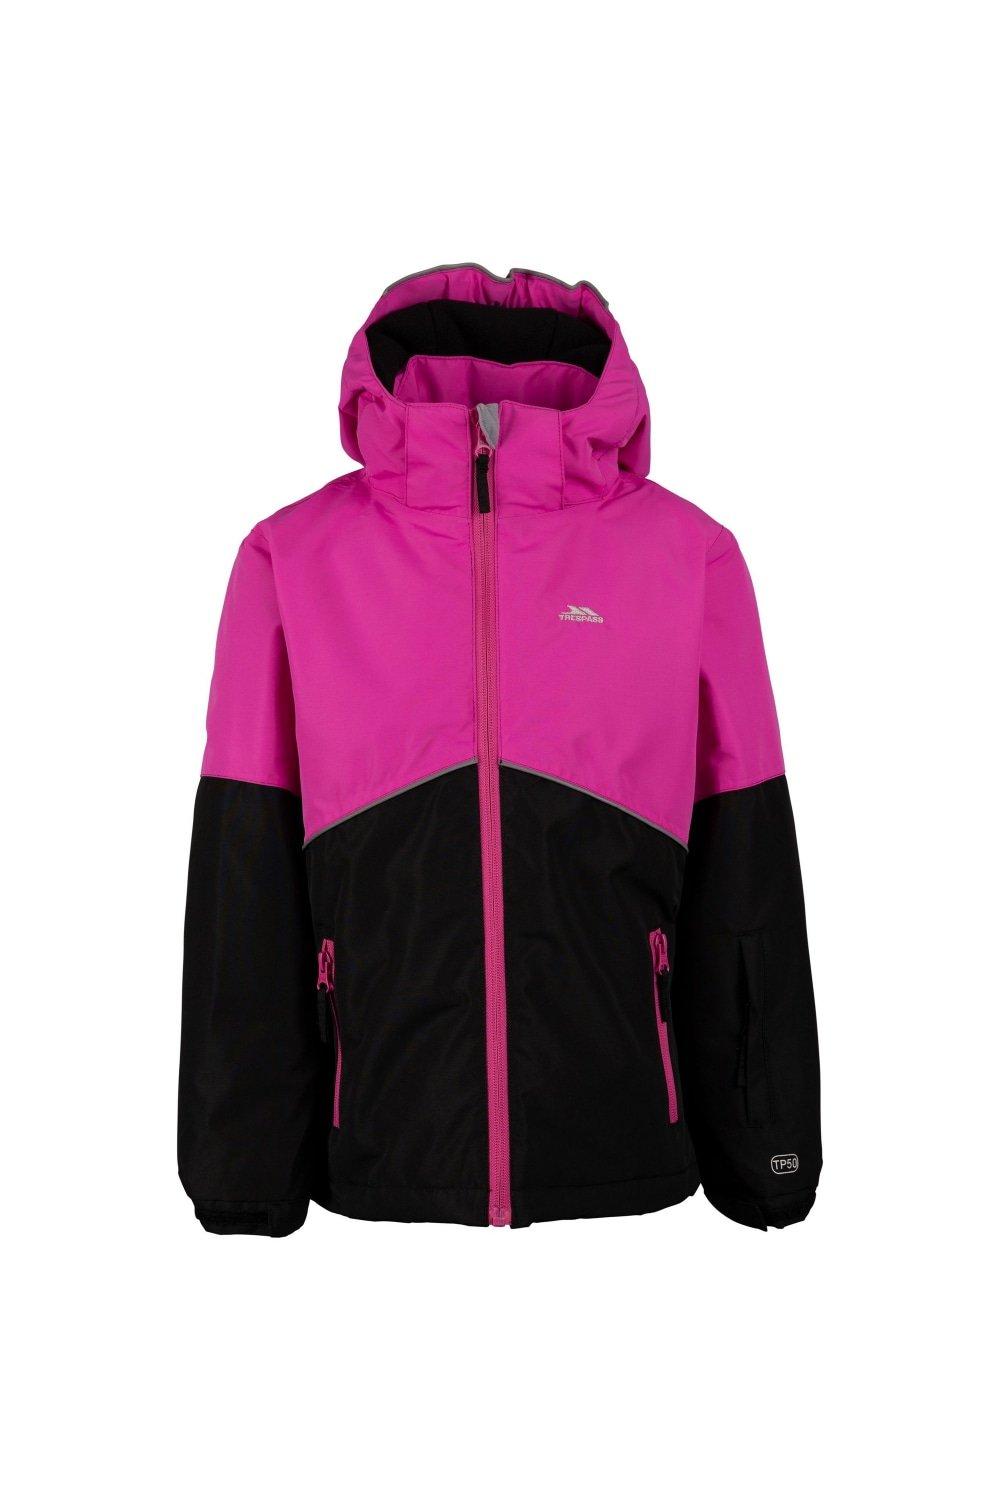 Лыжная куртка Precision TP50 Trespass, розовый термометр thermopro tp50 серый